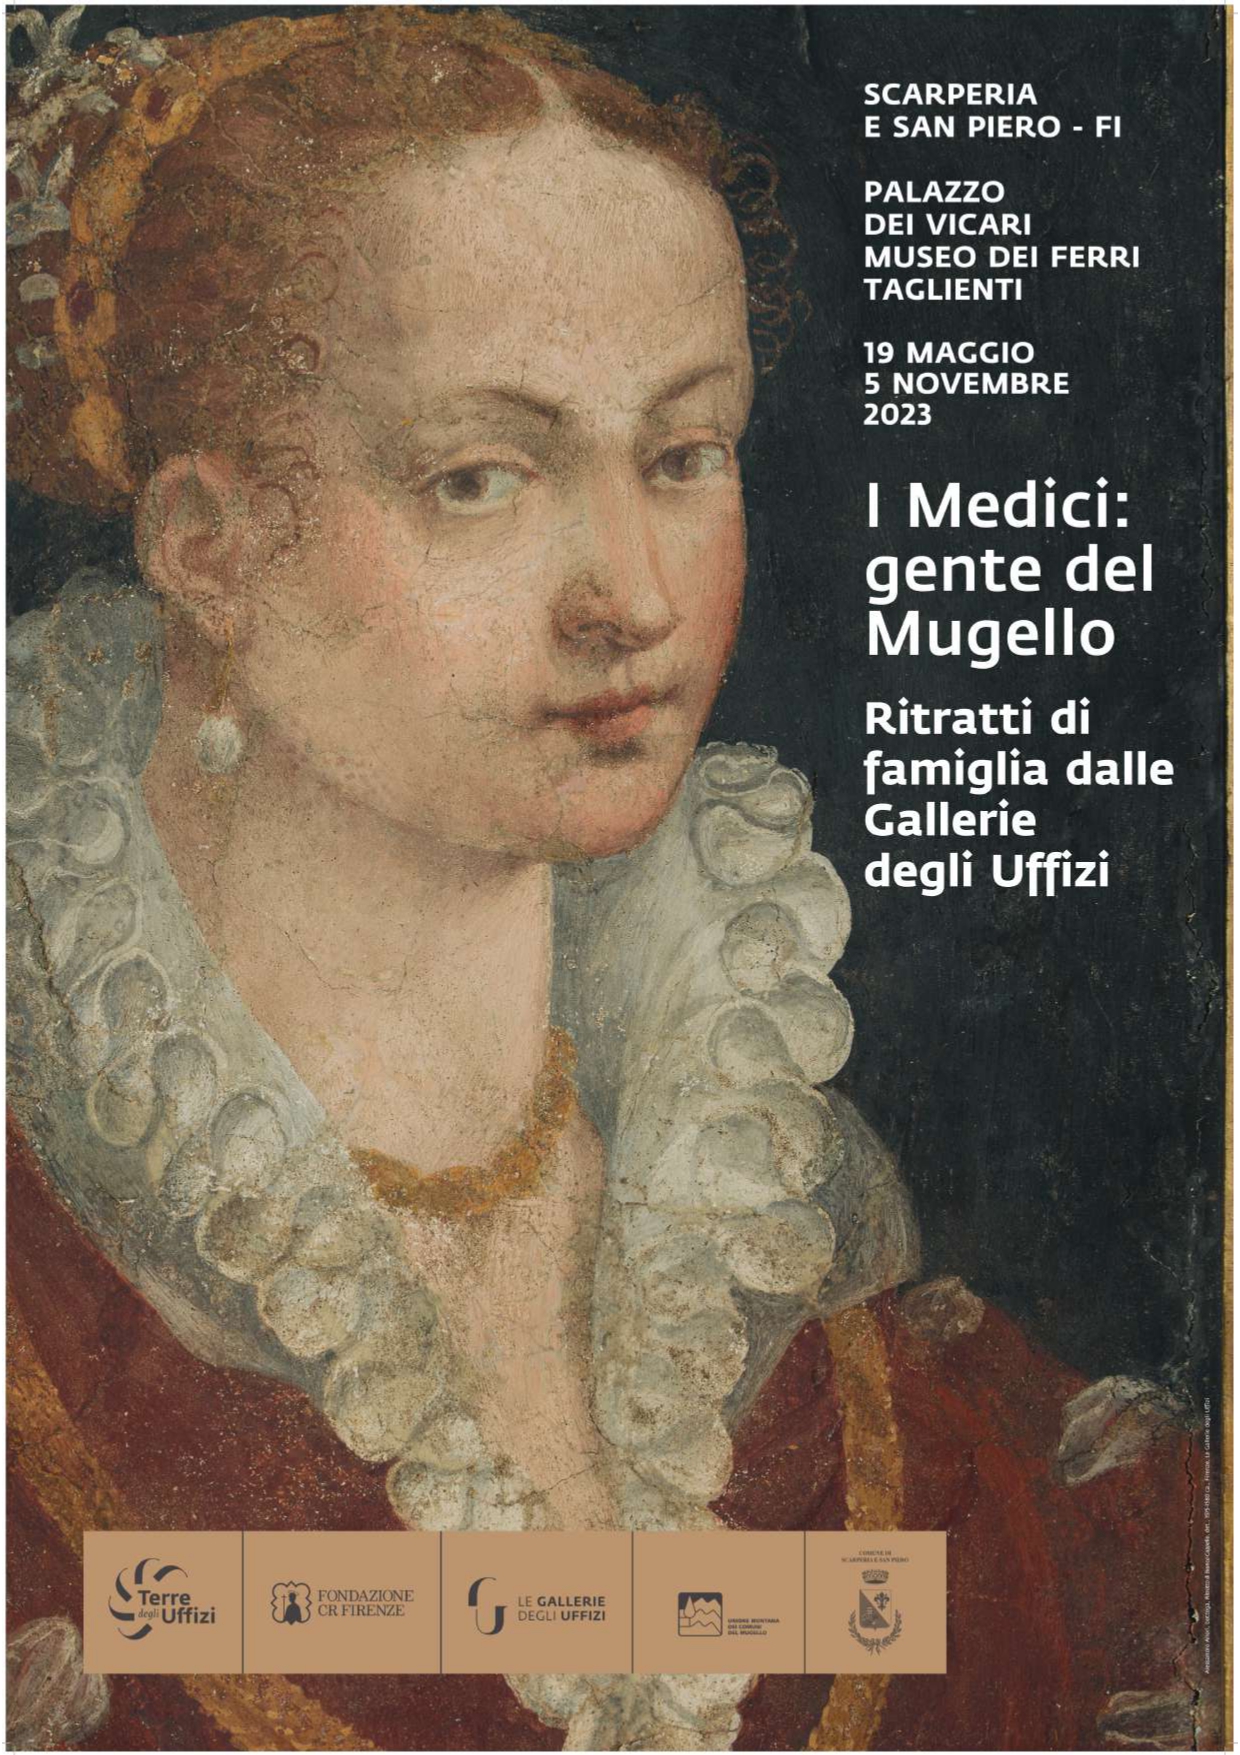 I Medici: gente del Mugello